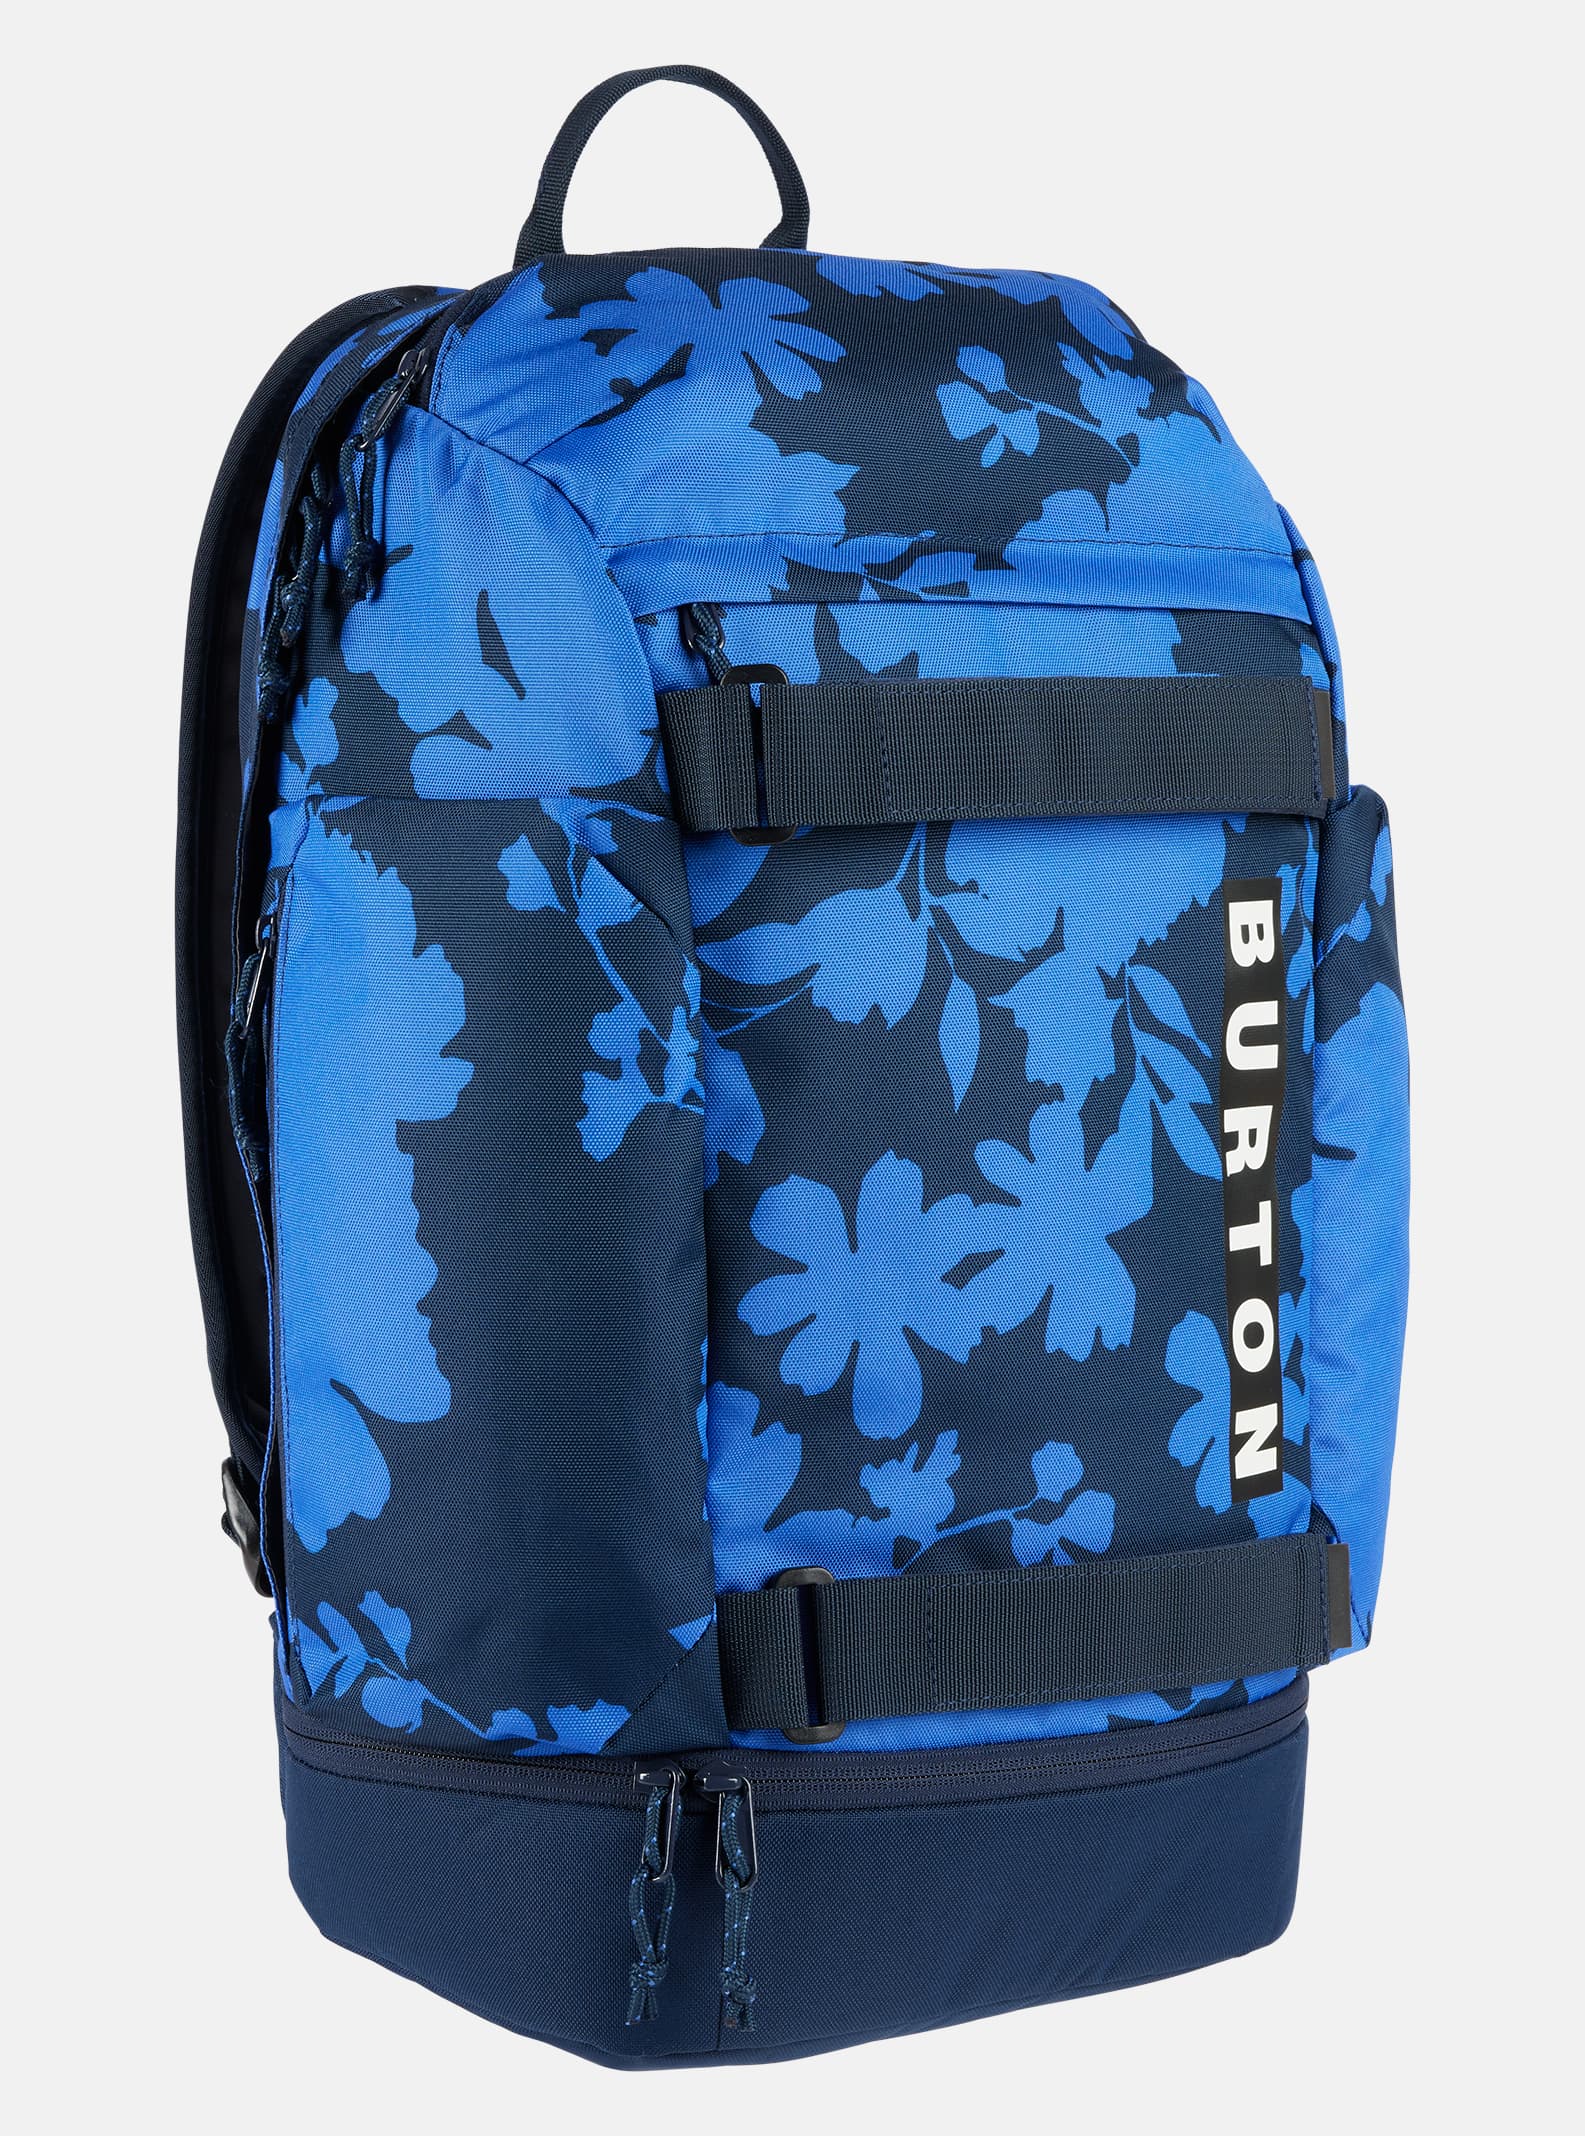 Outdoor & Snowboard Backpacks | Burton Snowboards GB